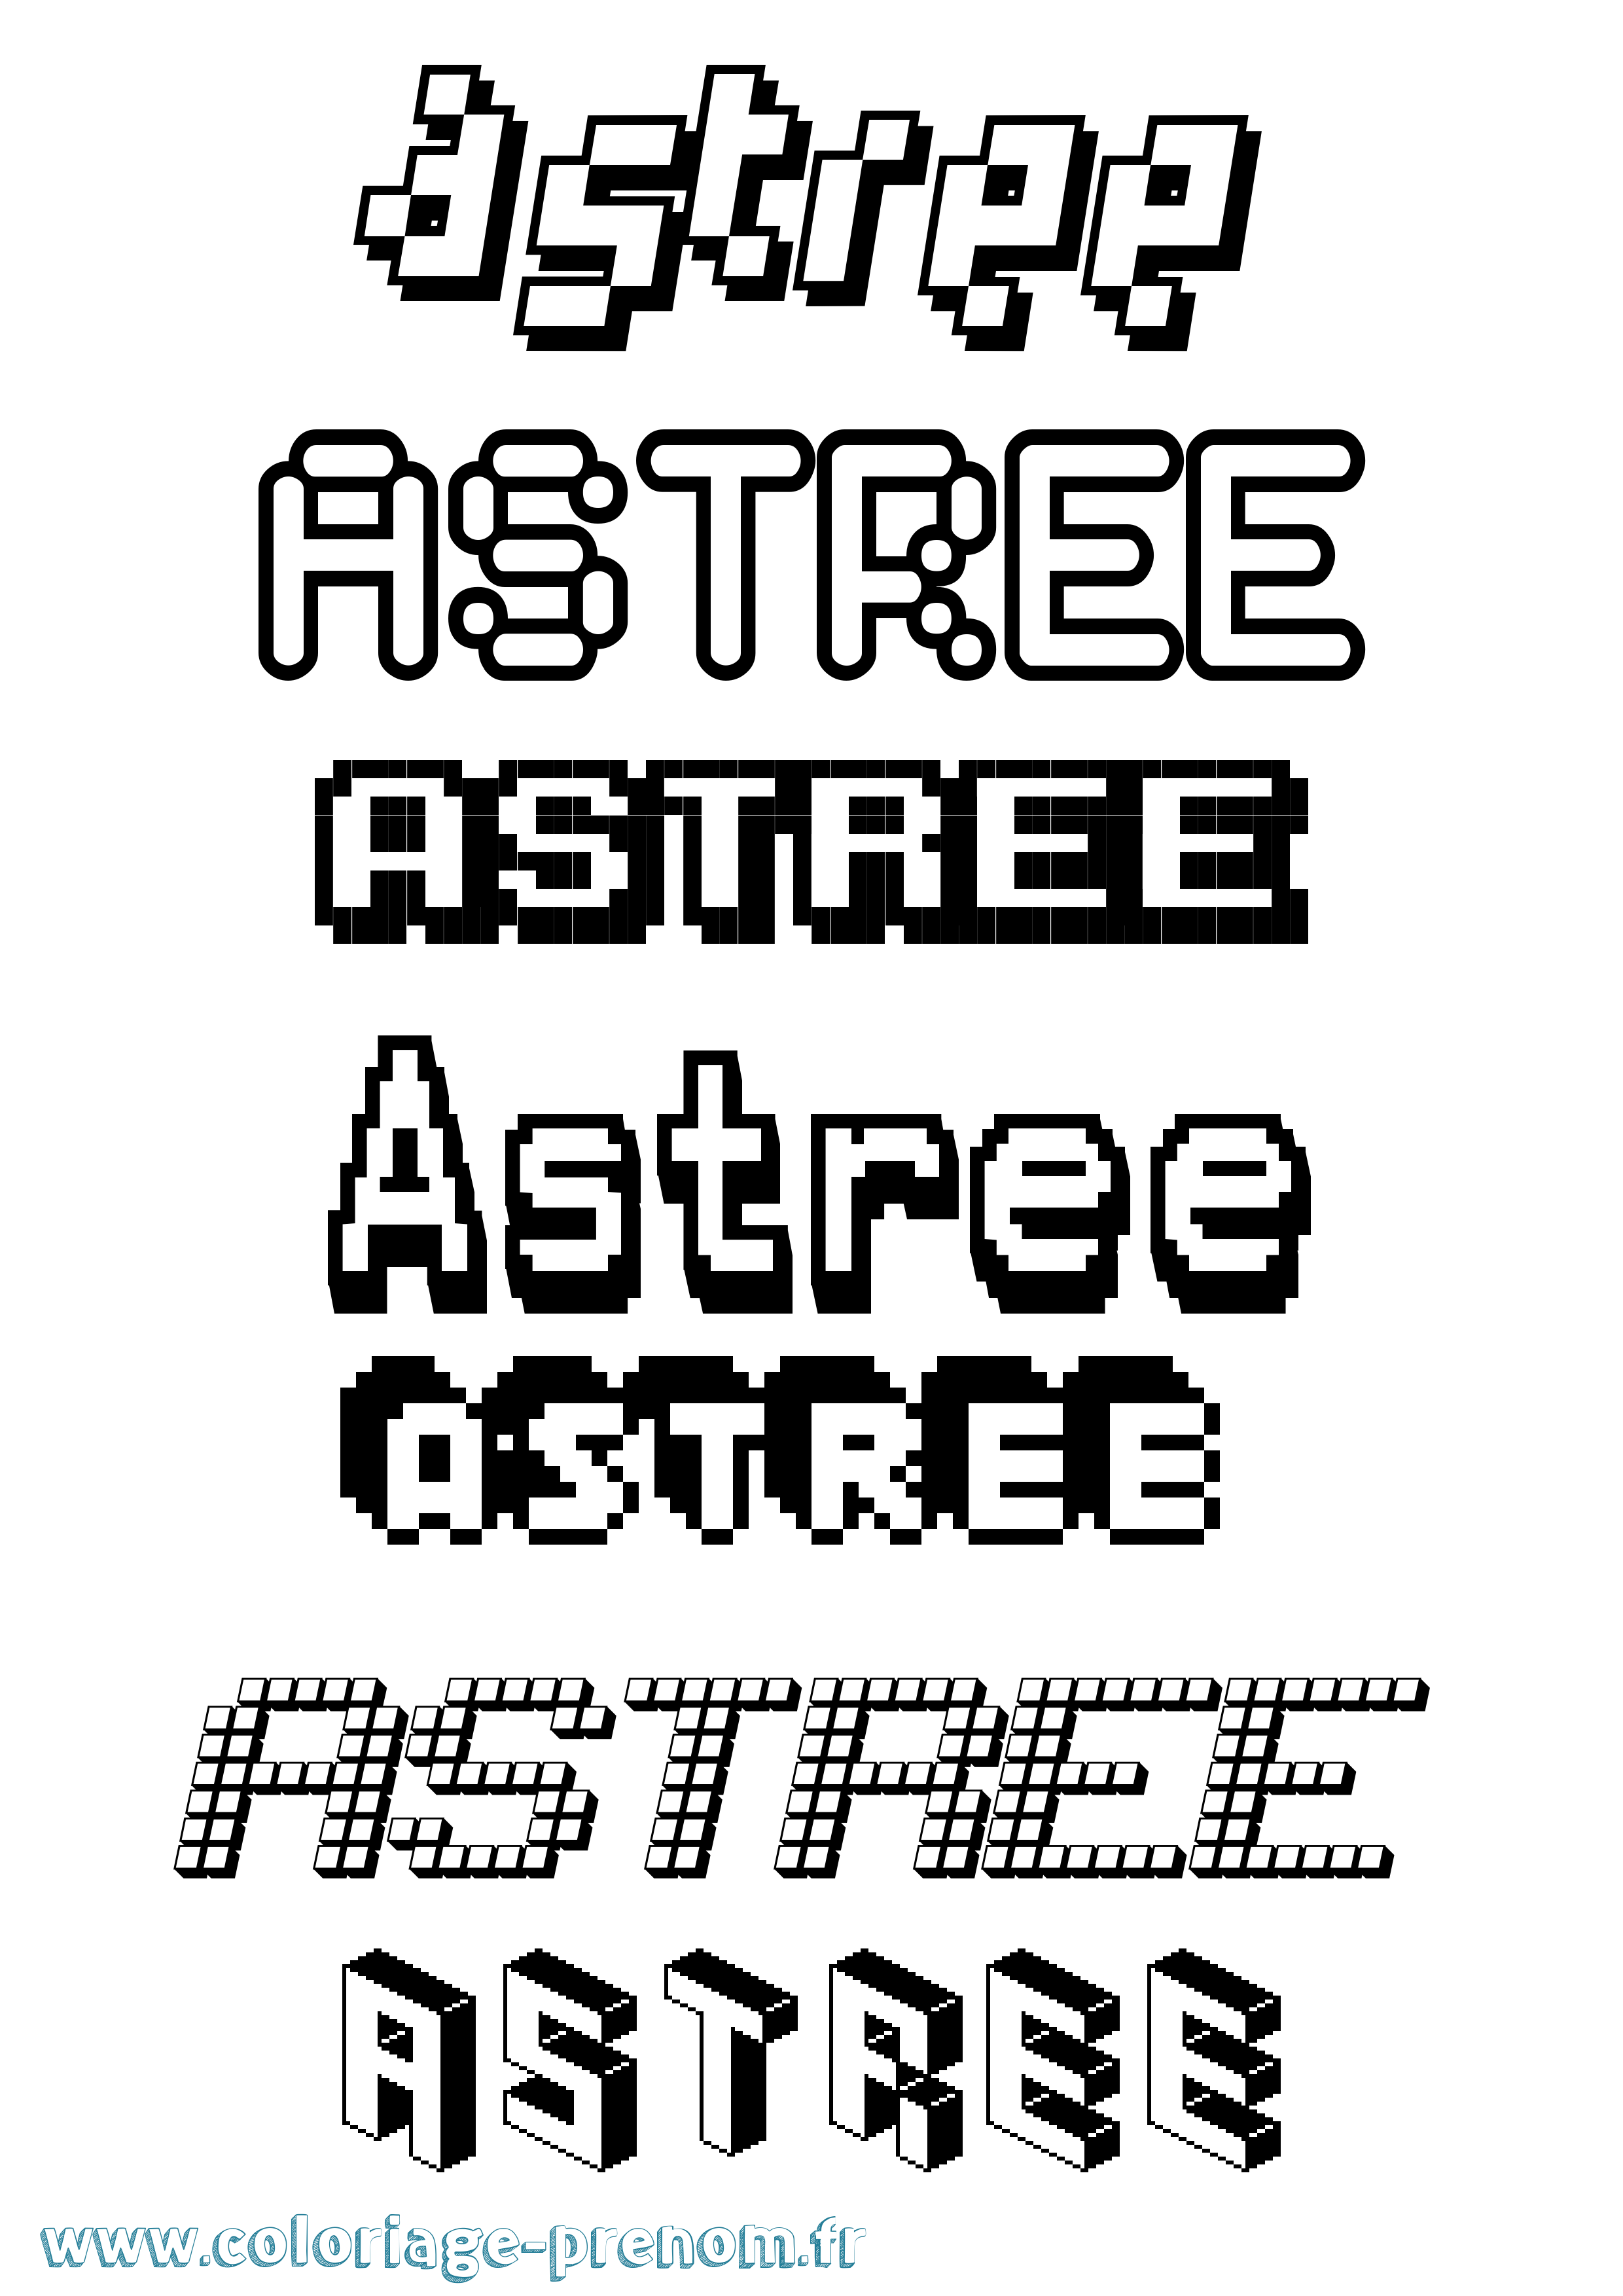 Coloriage prénom Astree Pixel